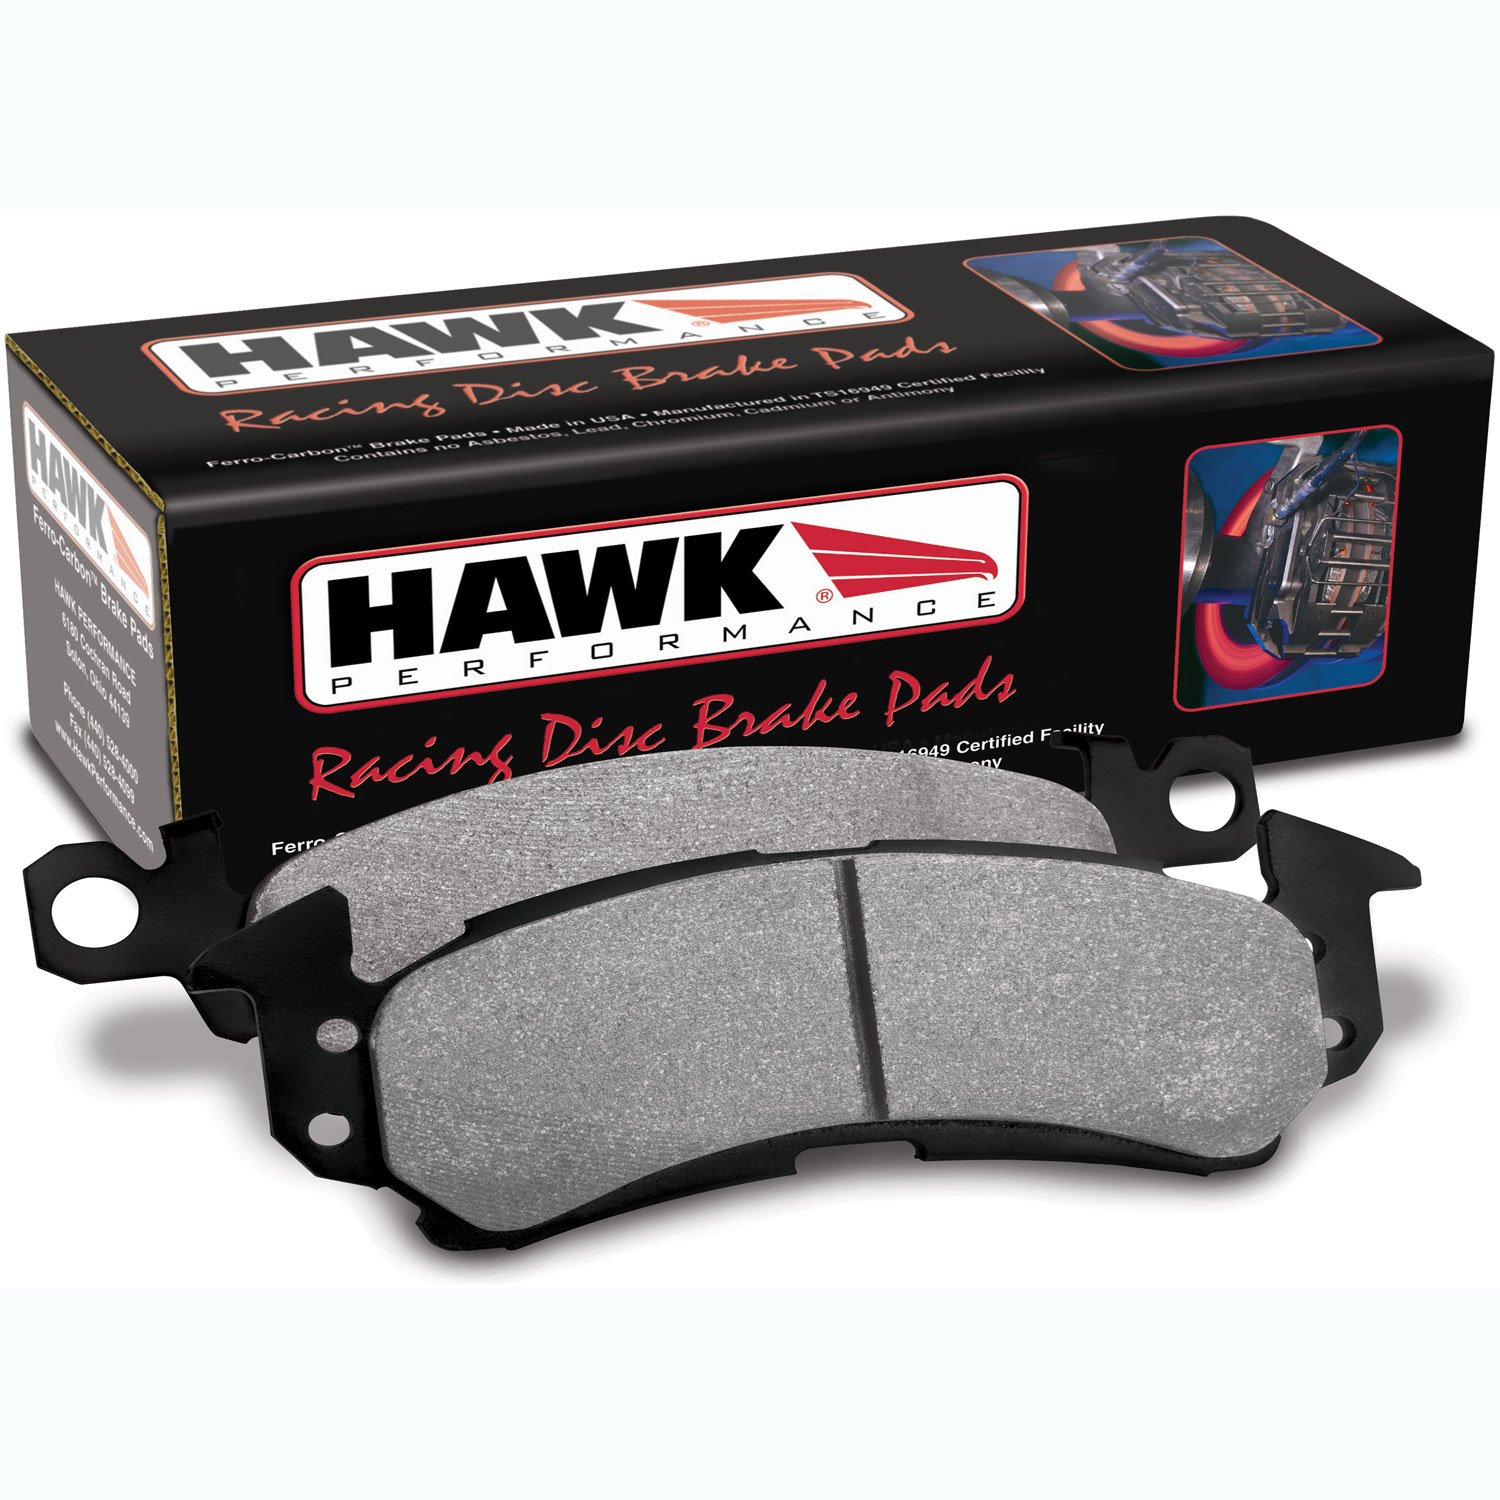 Disc Brake Pad HP Plus w/0.642 Thickness